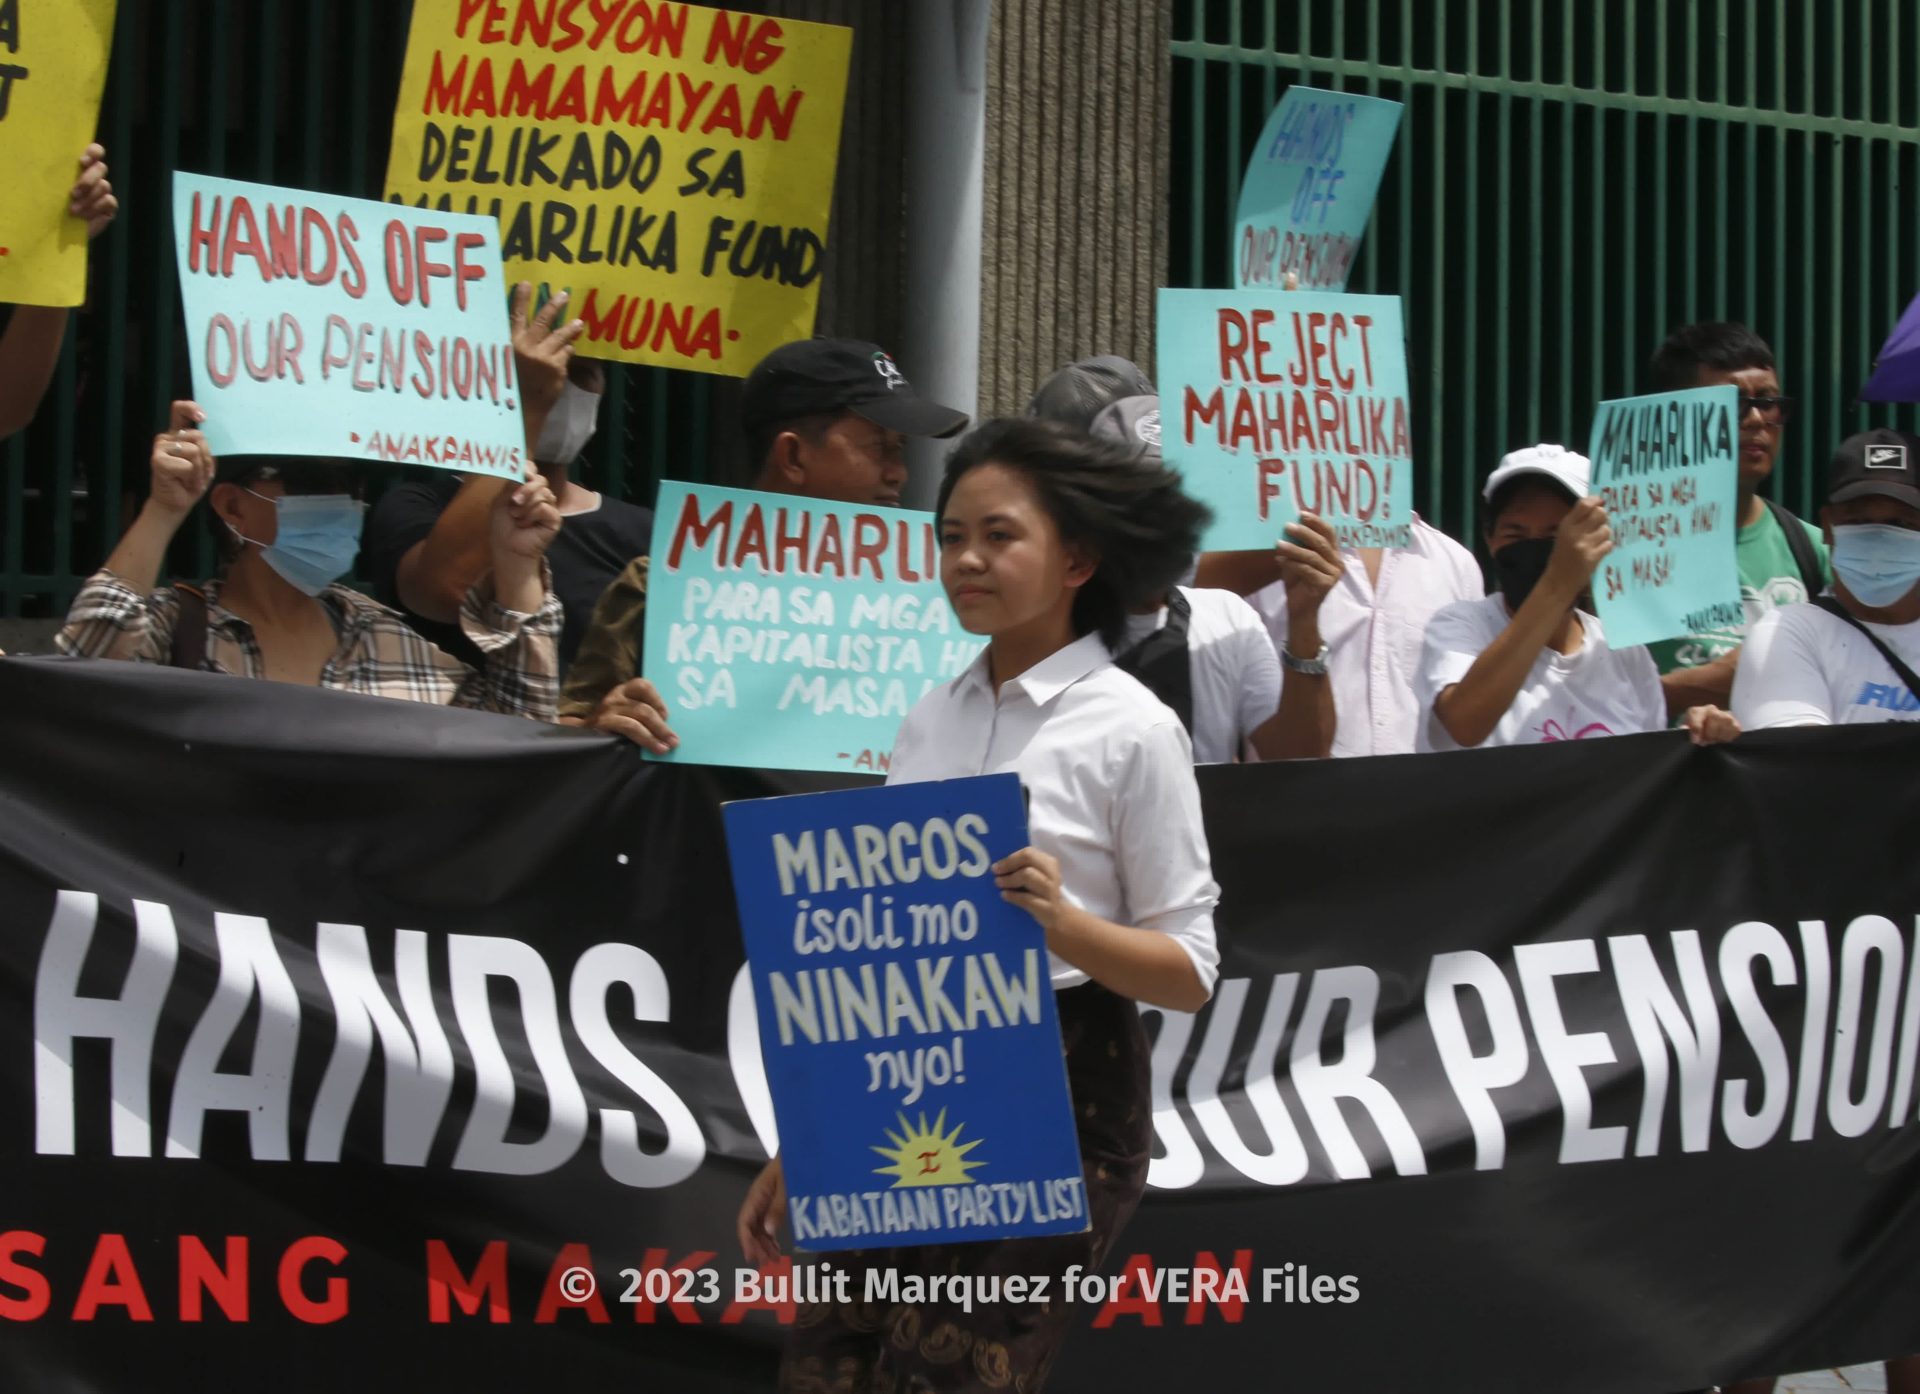 Maharlika Fund Protest 5/6 Photo by Bullit Marquez